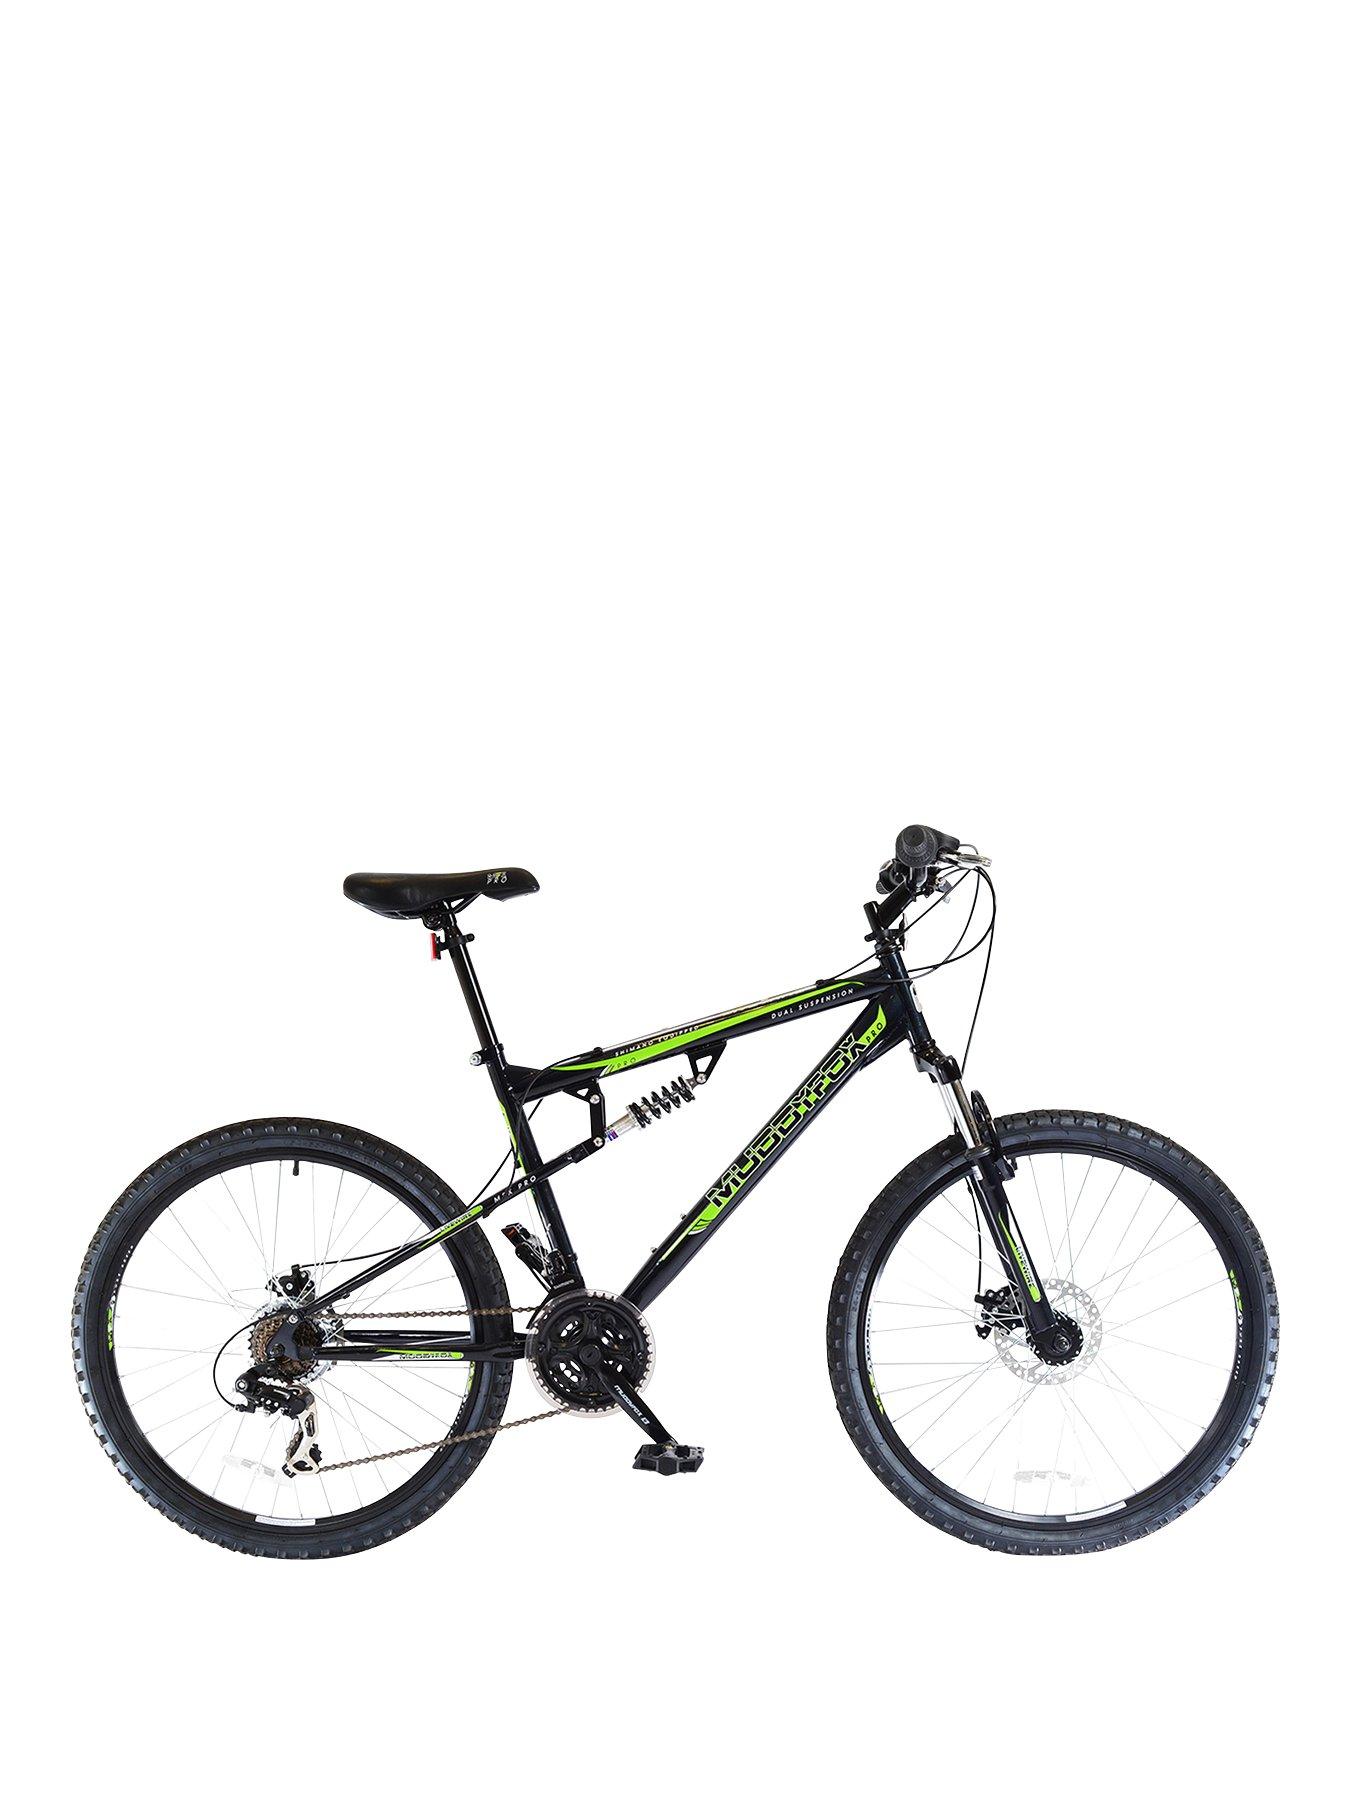 mens mountain bike 18 inch frame